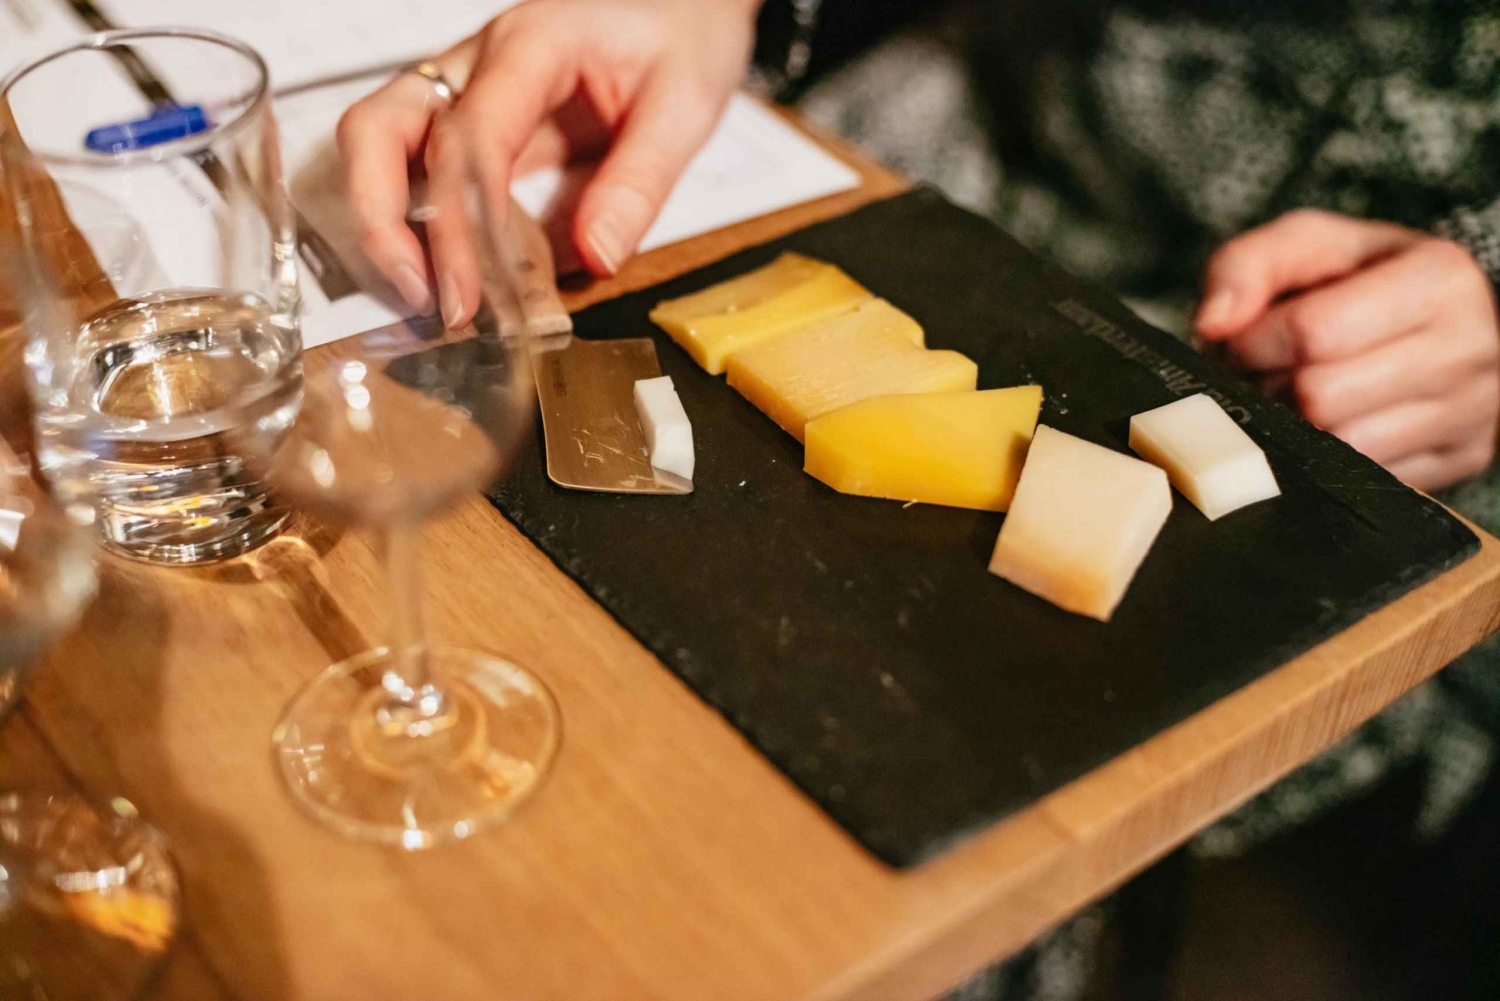 Amsterdam: Mesterlig nederlandsk oste-smaking med vin